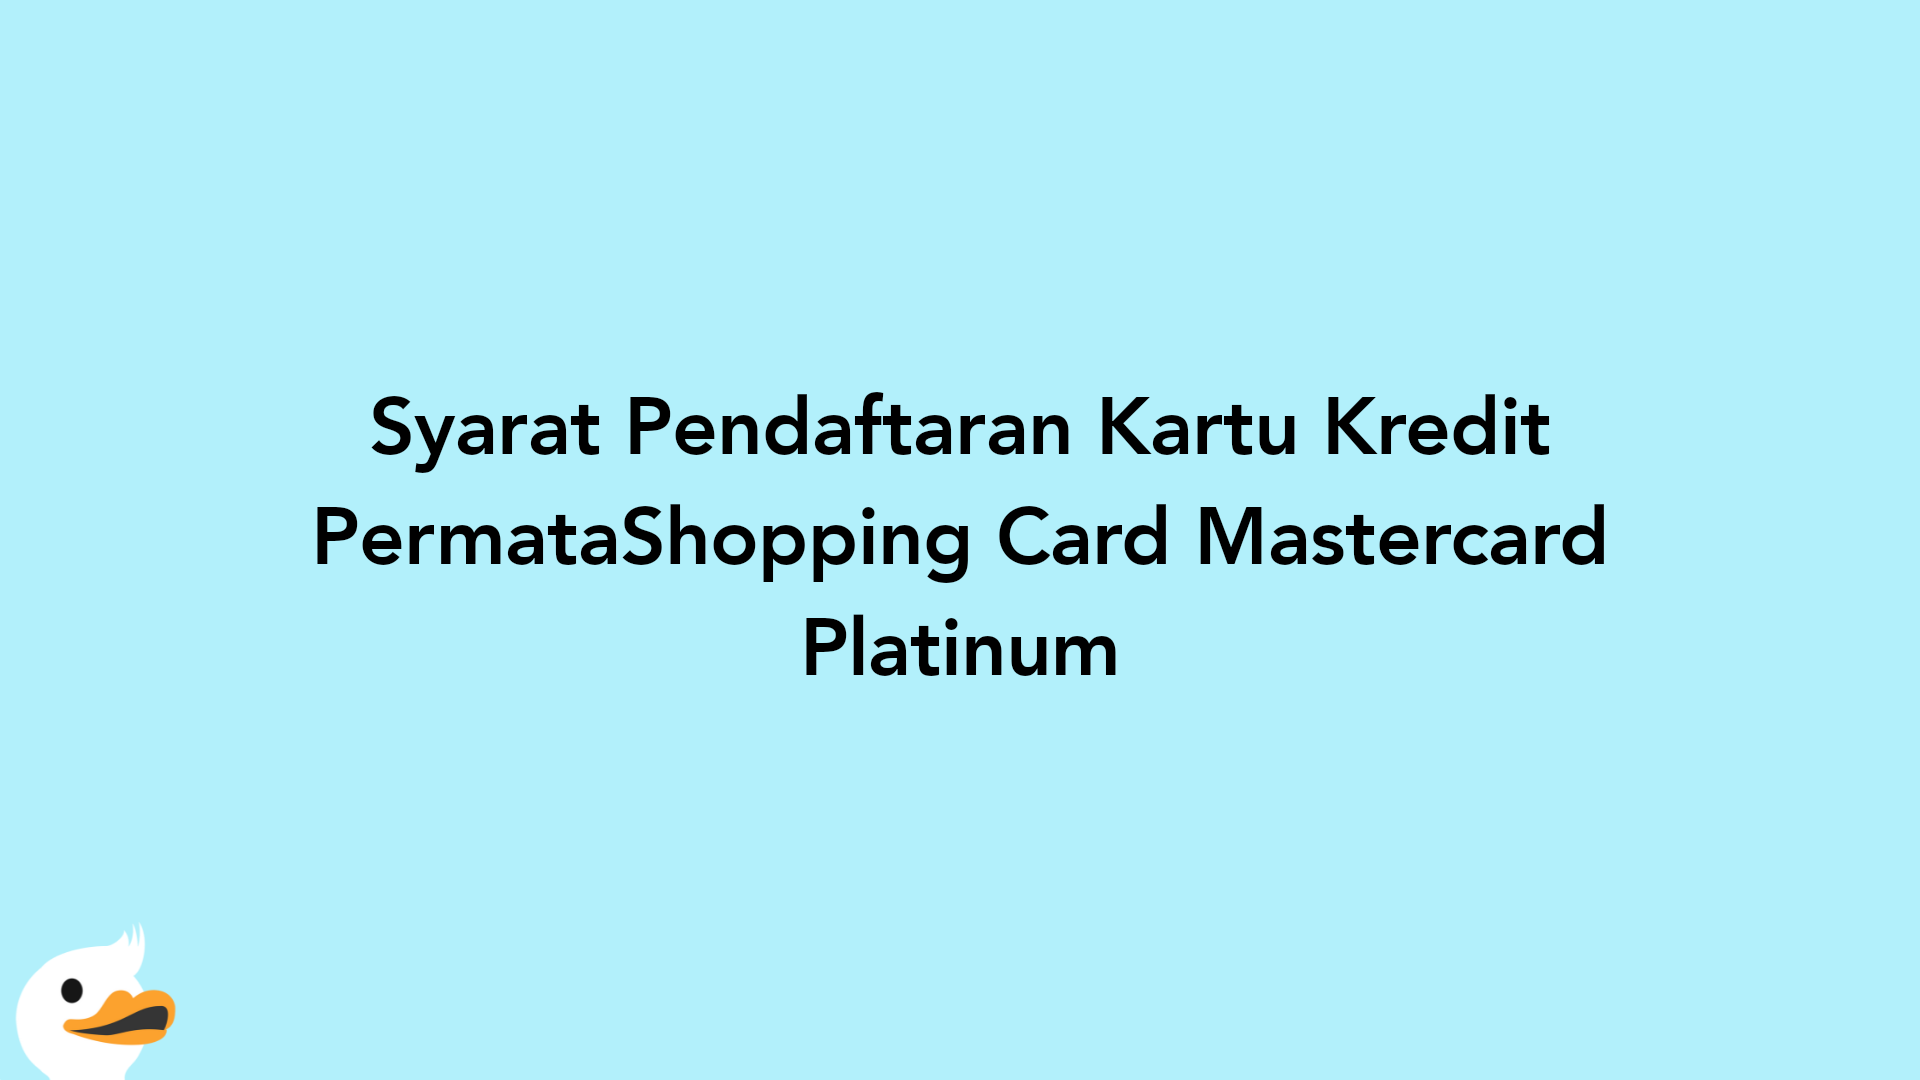 Syarat Pendaftaran Kartu Kredit PermataShopping Card Mastercard Platinum